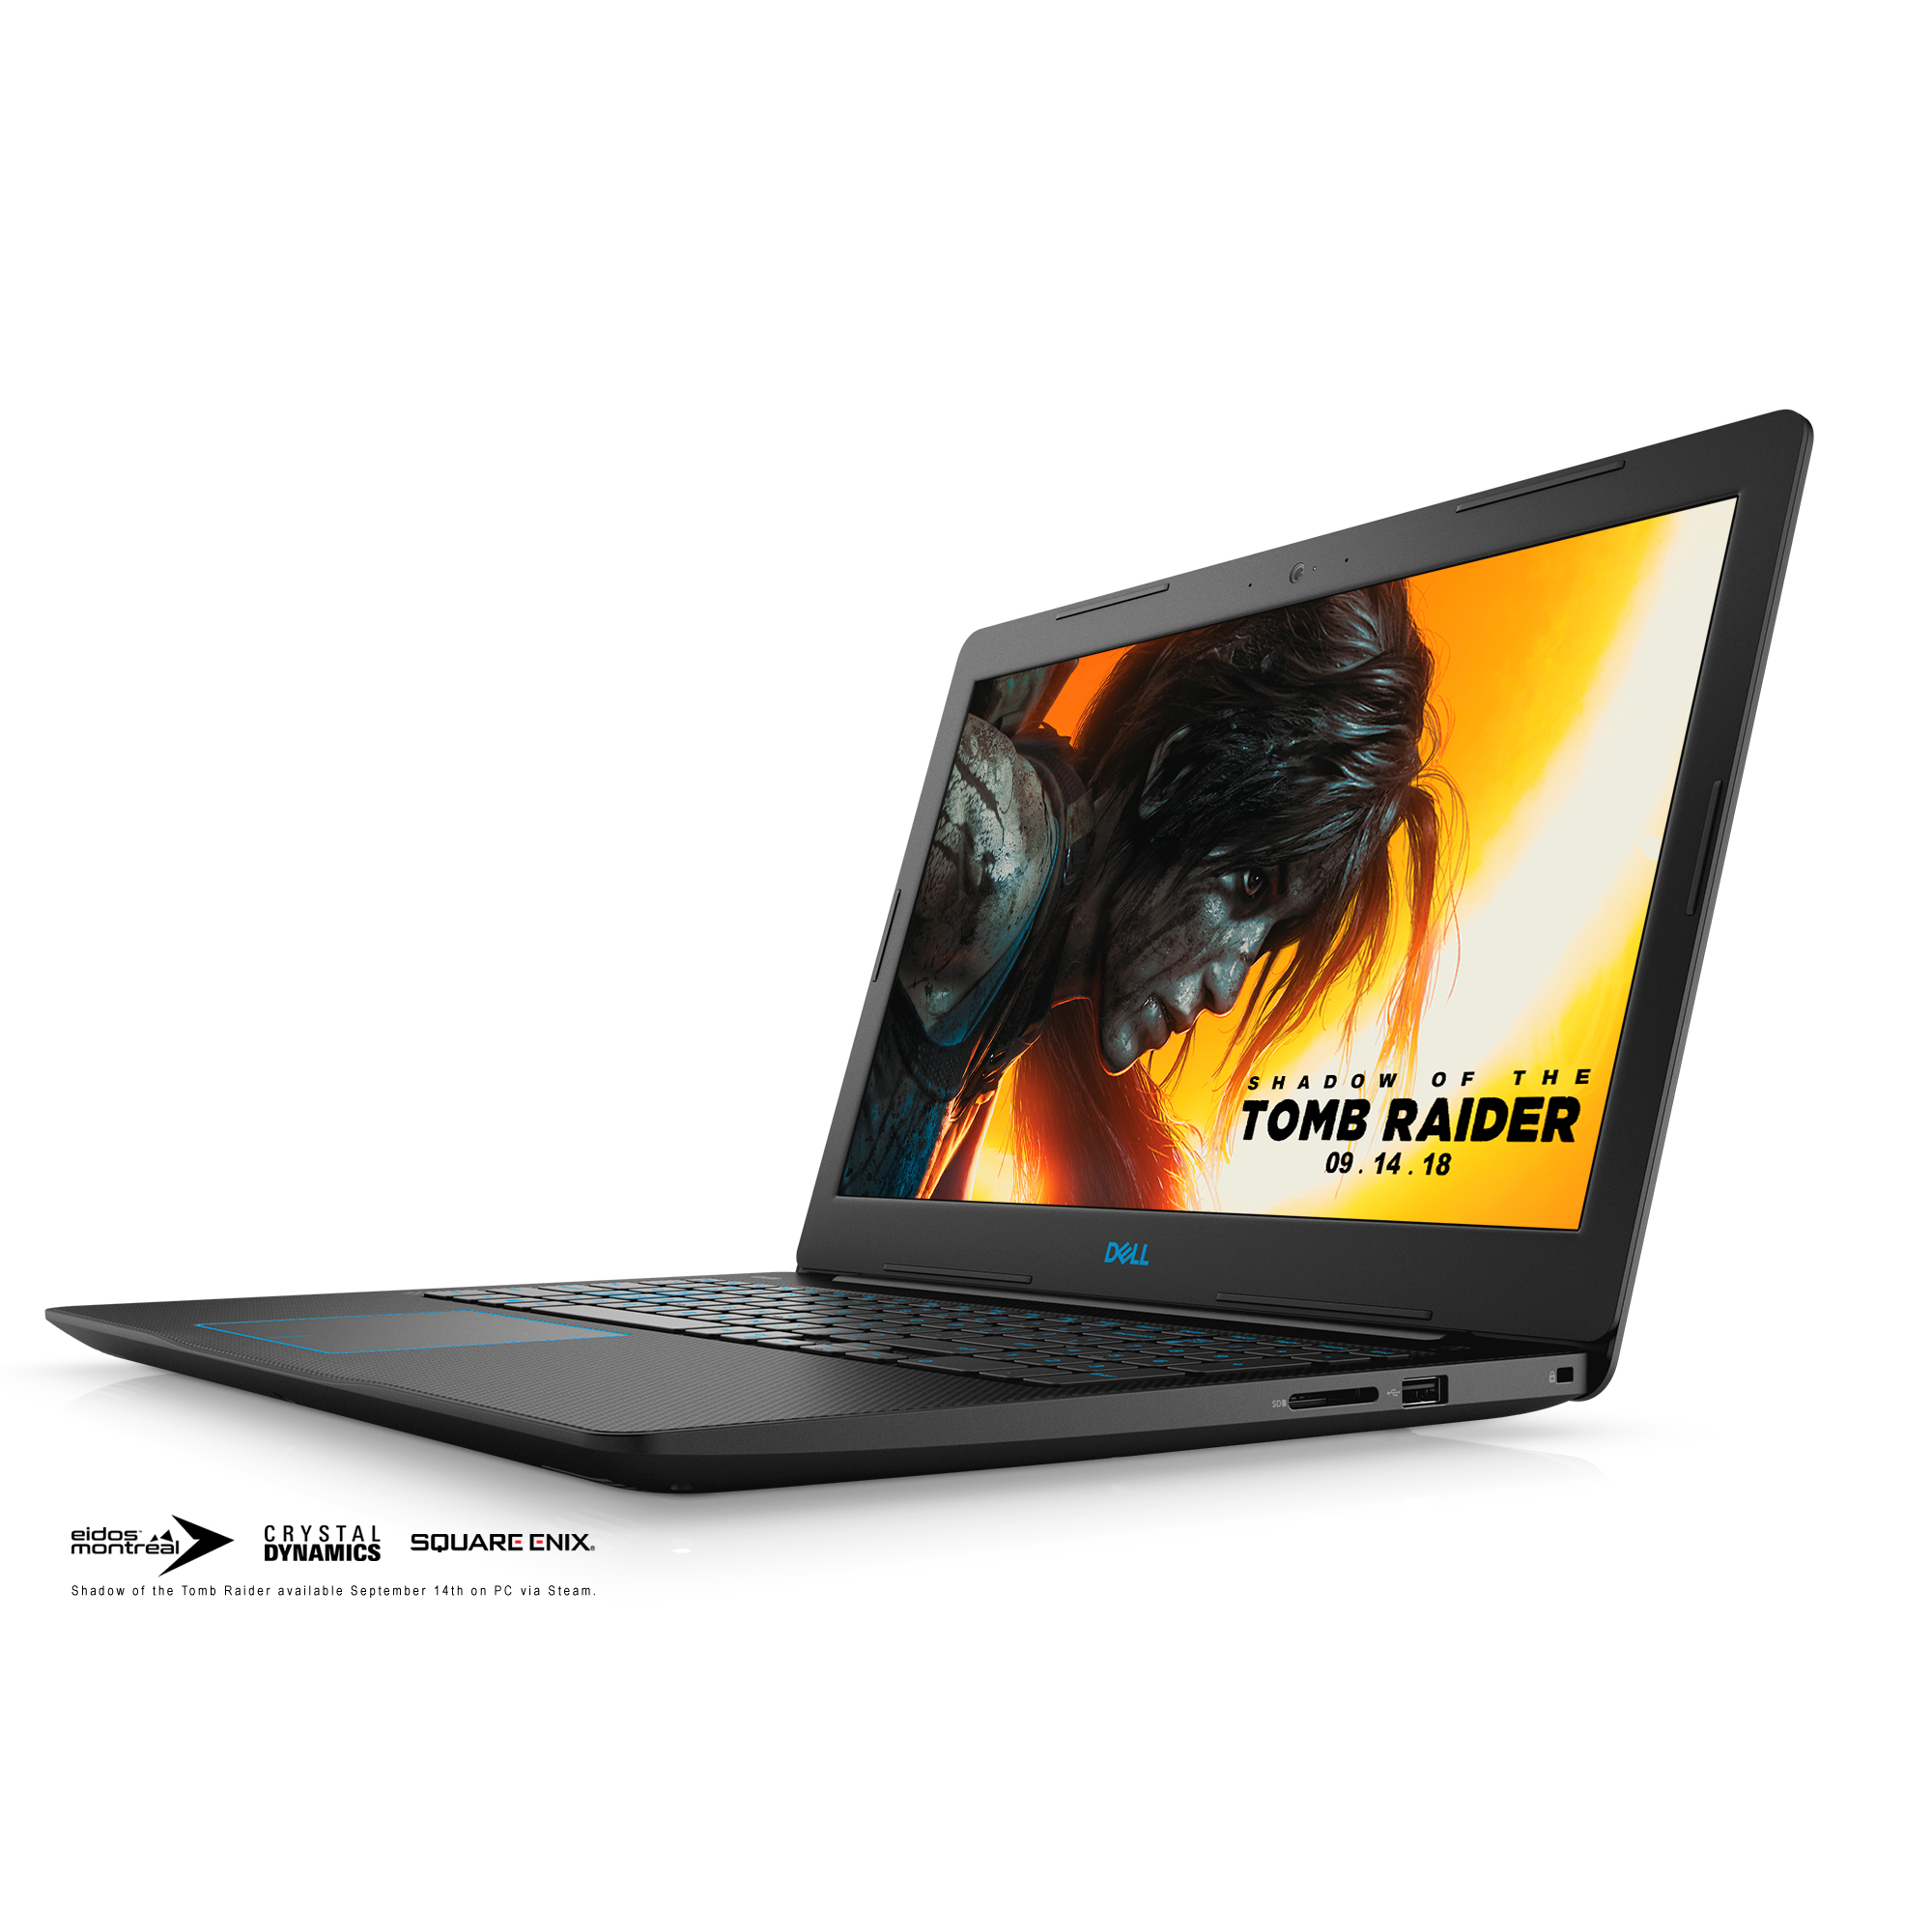 Dell G3 Gaming Laptop 15.6" Full HD, Intel Core i5-8300H, NVIDIA GeForce GTX 1050 4GB, 1TB HDD + 16GB Intel Optane Storage, 8GB RAM, Windows 10 - Black - G3579-5245BLK - image 4 of 6